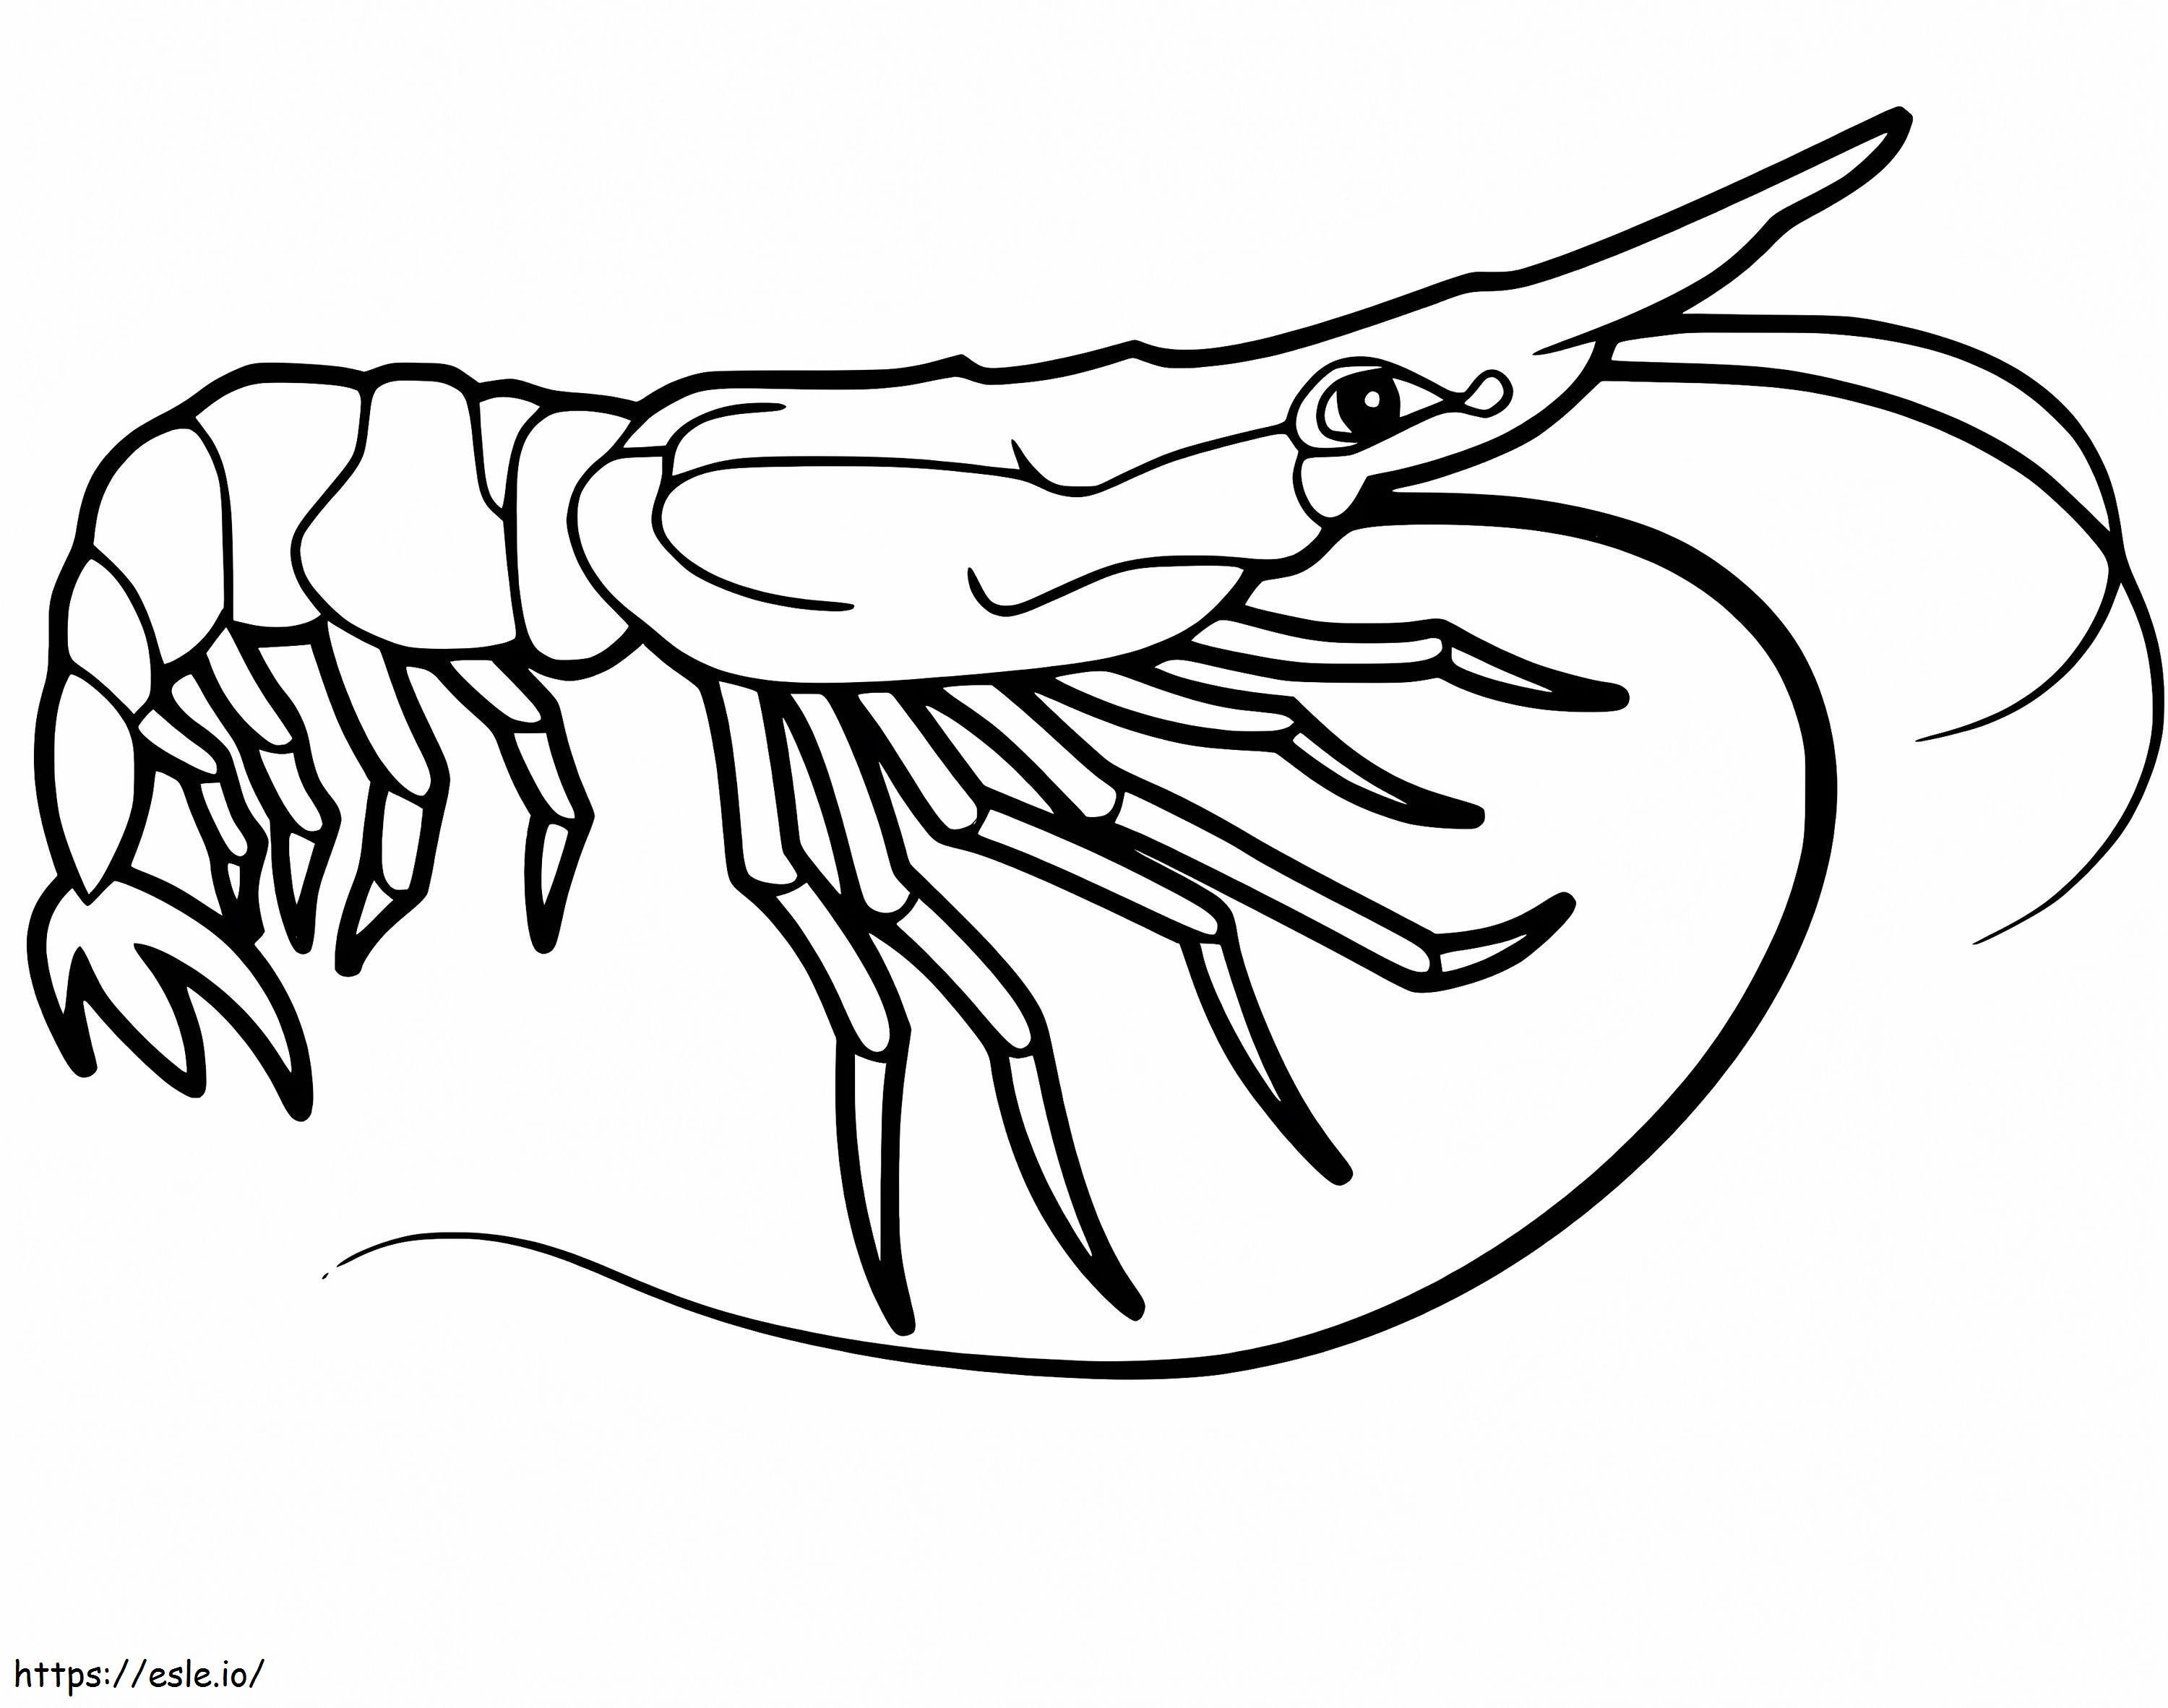 Whiteleg Shrimp coloring page